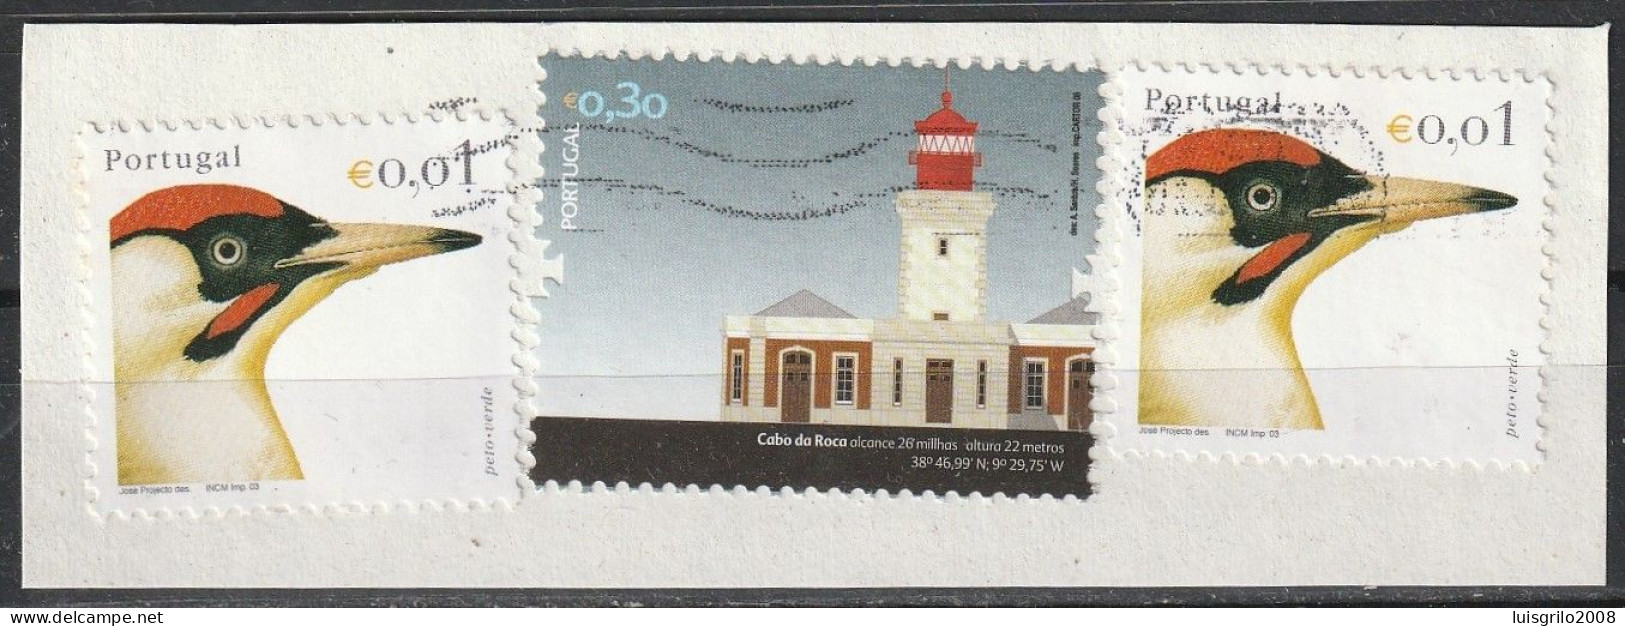 Portugal, 2003 - Aves De Portugal, €0,01 + €0,30 -|- Mundifil - 2934 + 3721 .  Fragment - Birds & Lighthouse - Gebraucht